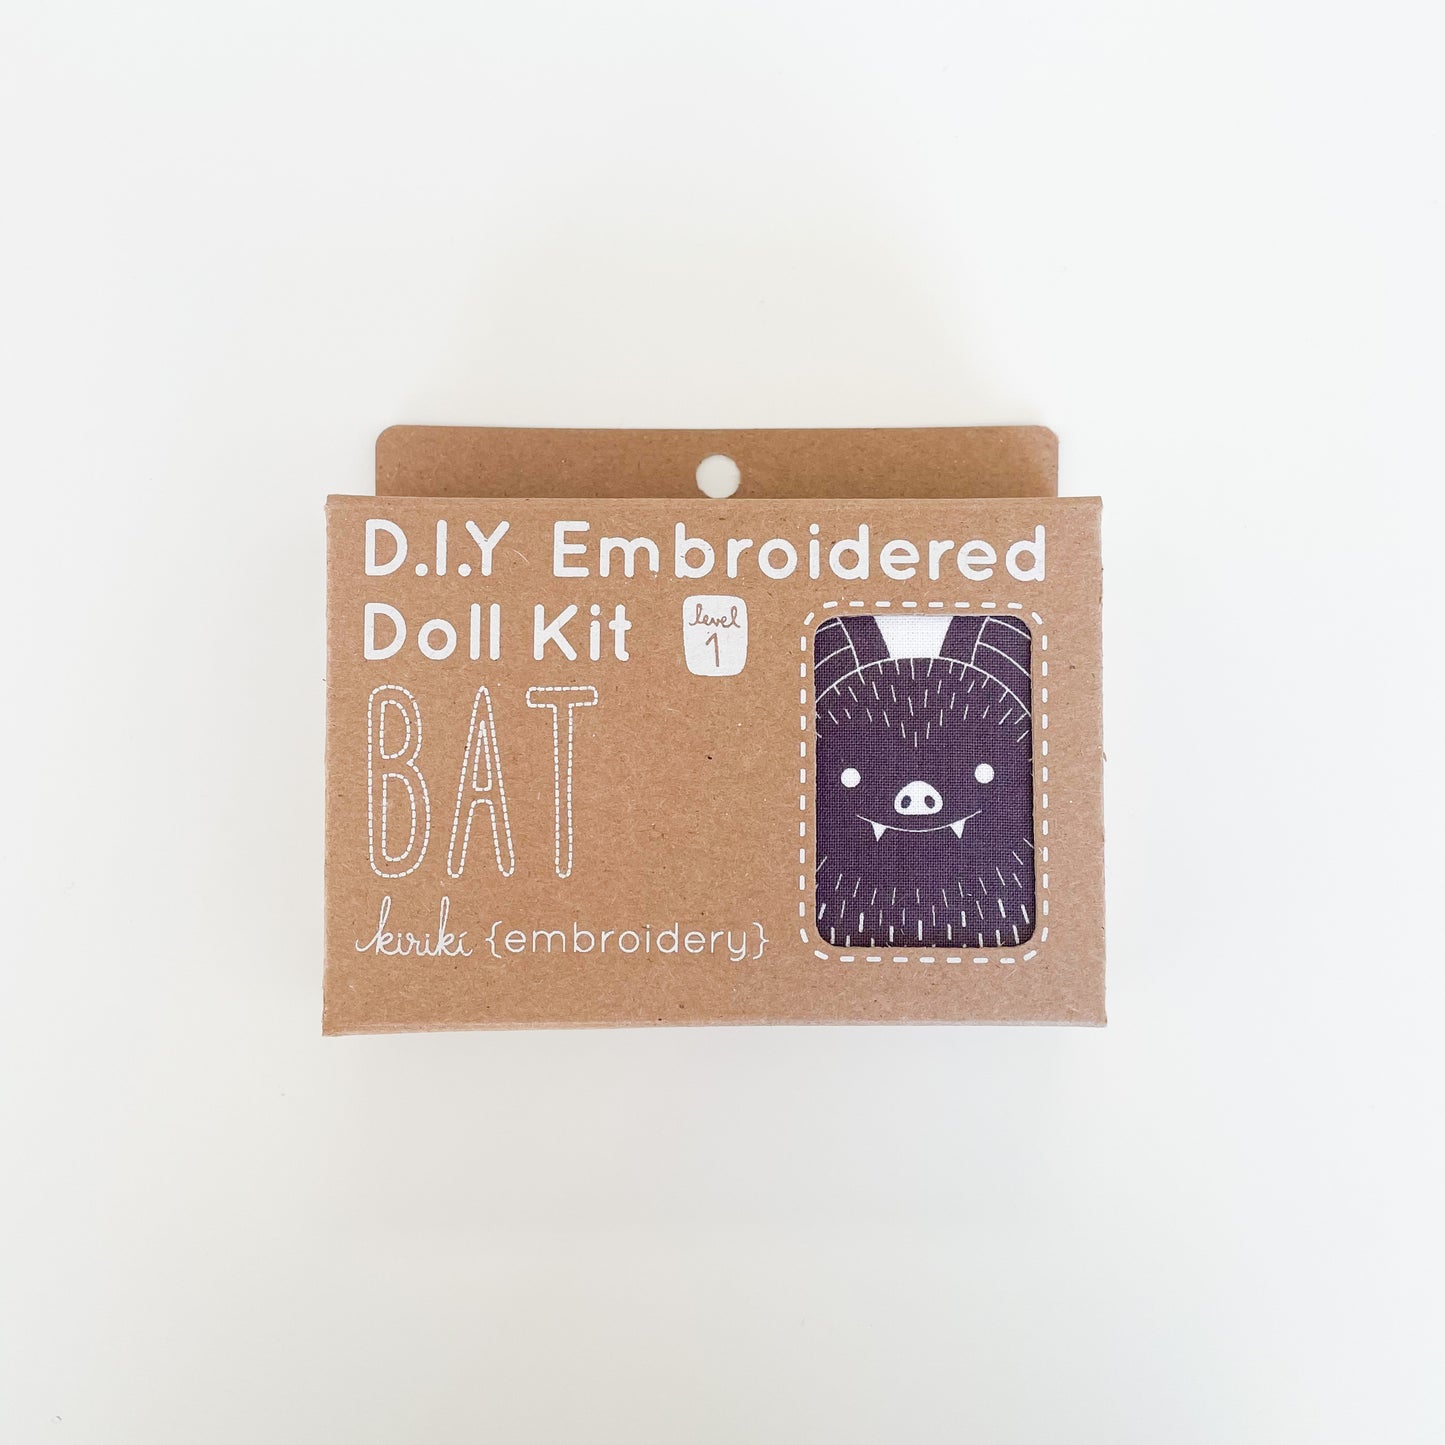 Embroidered Doll Kit - Bat